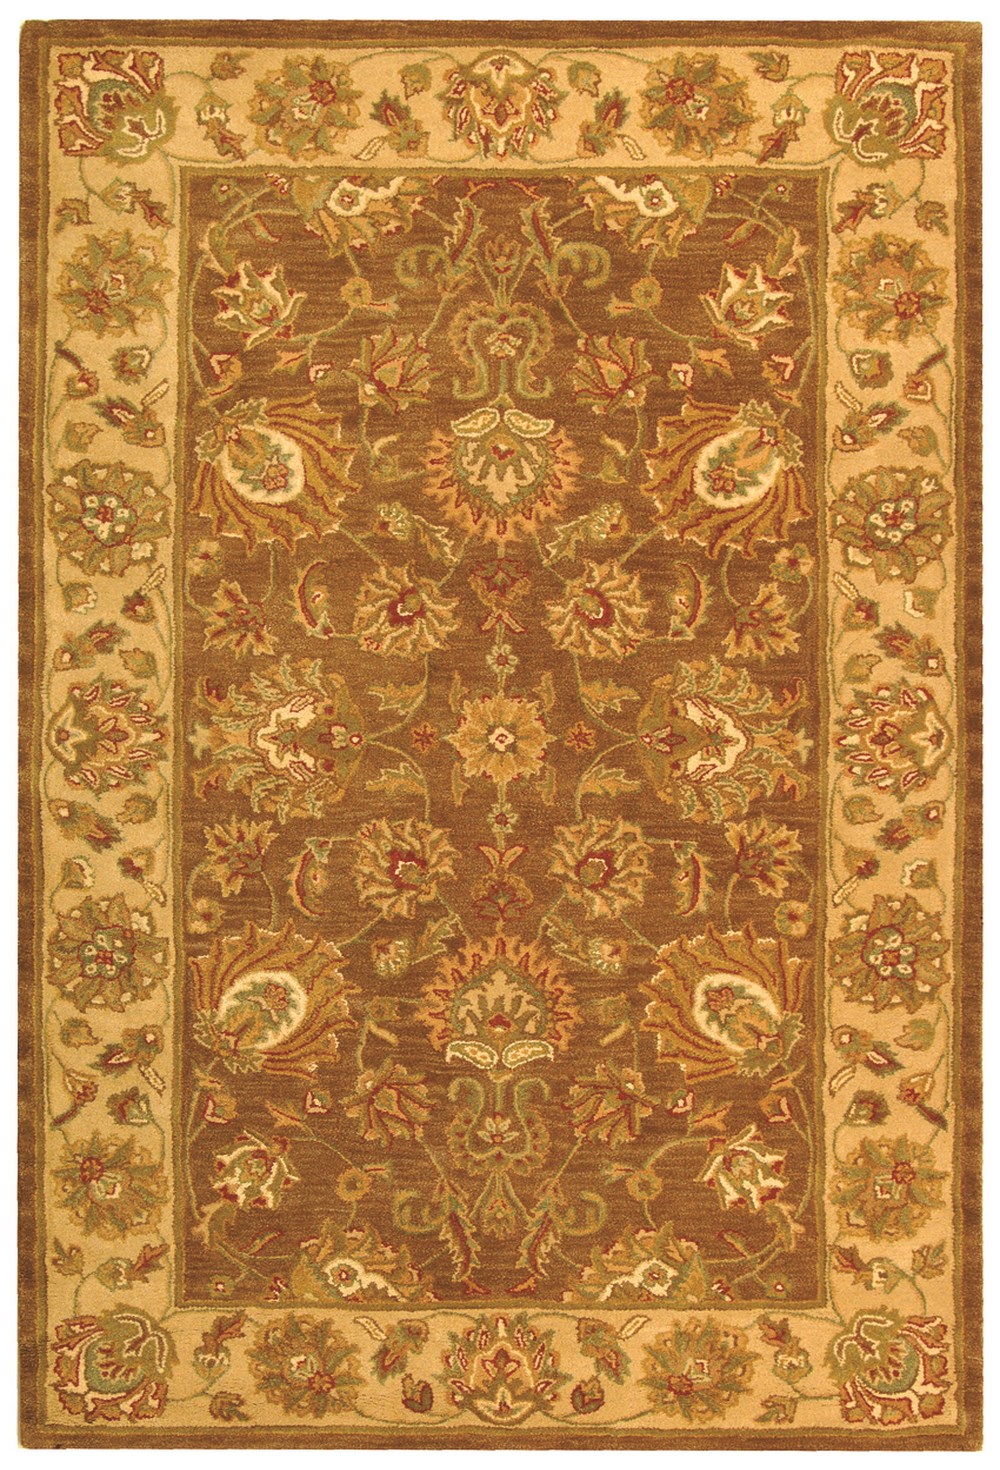 SAFAVIEH Heritage Regis Traditional Wool Area Rug, Brown/Ivory, 5' x 8' - image 1 of 4